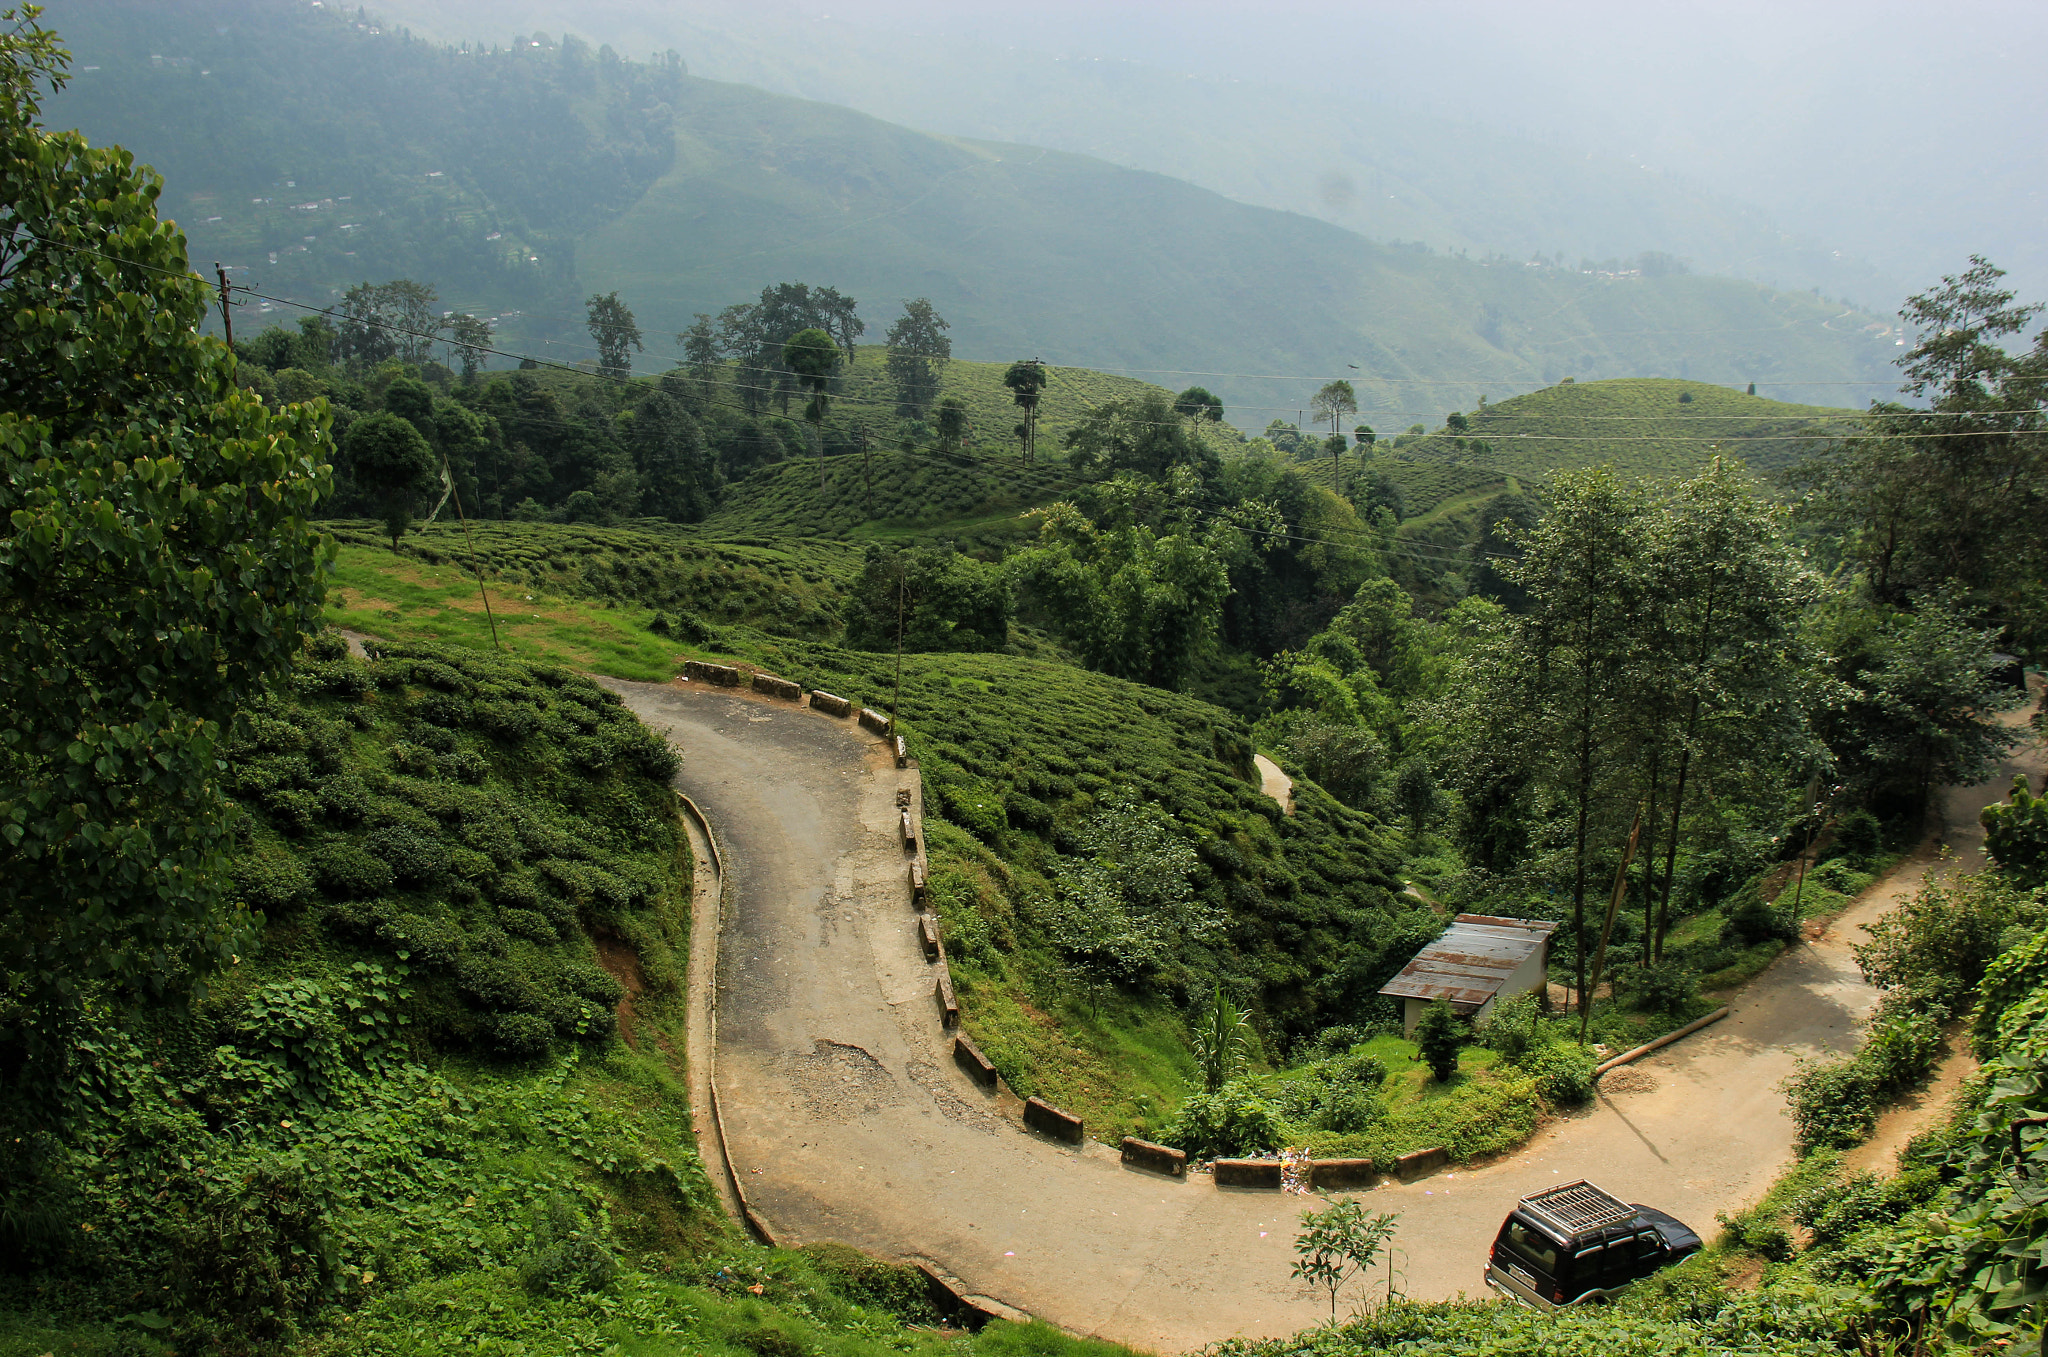 Darjeeling Tea Gardens by Asha Douglas / 500px